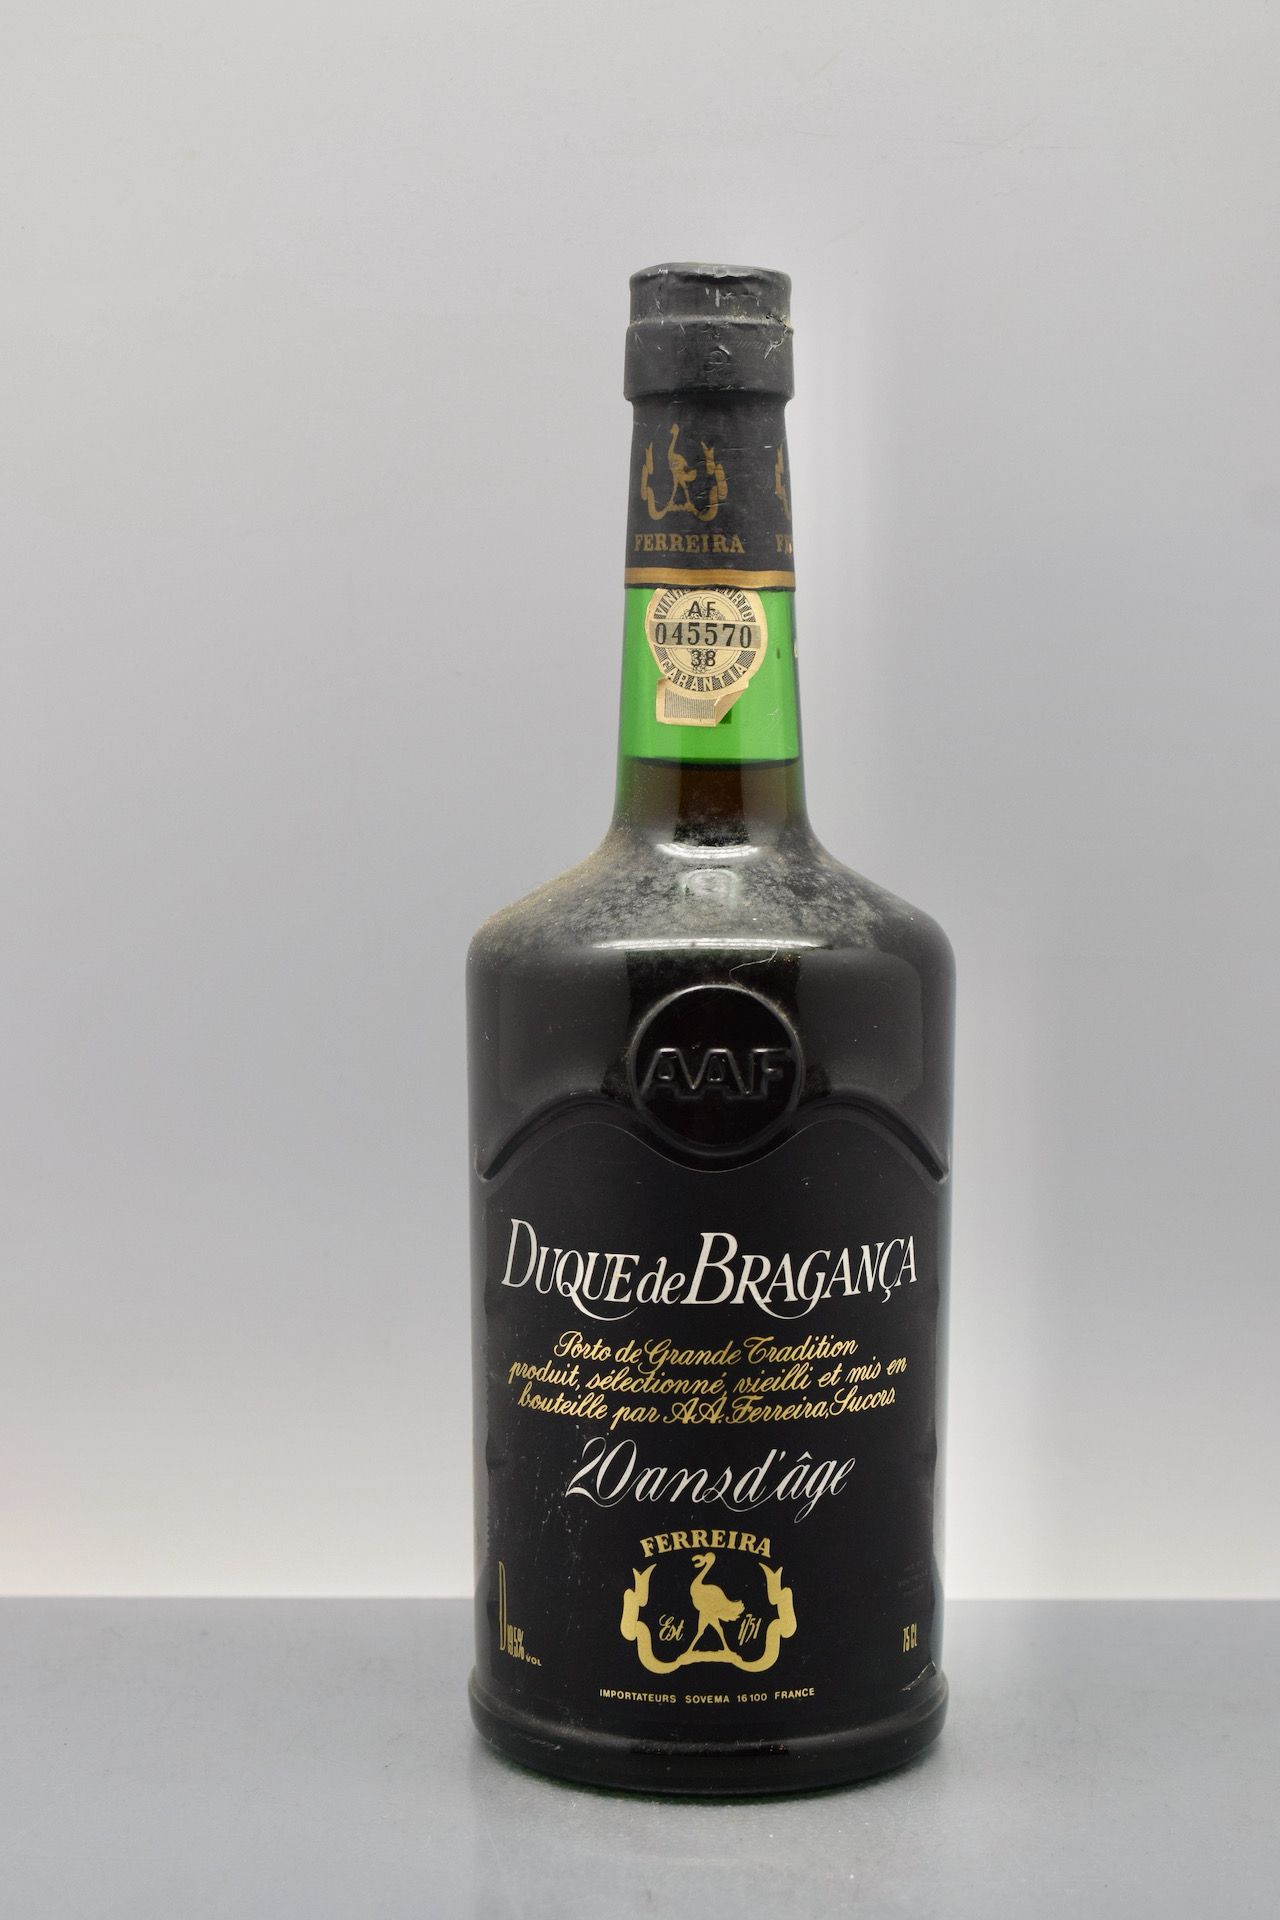 Null 1 bottle PORTO "Duque de Bragança", Ferreira 20 years